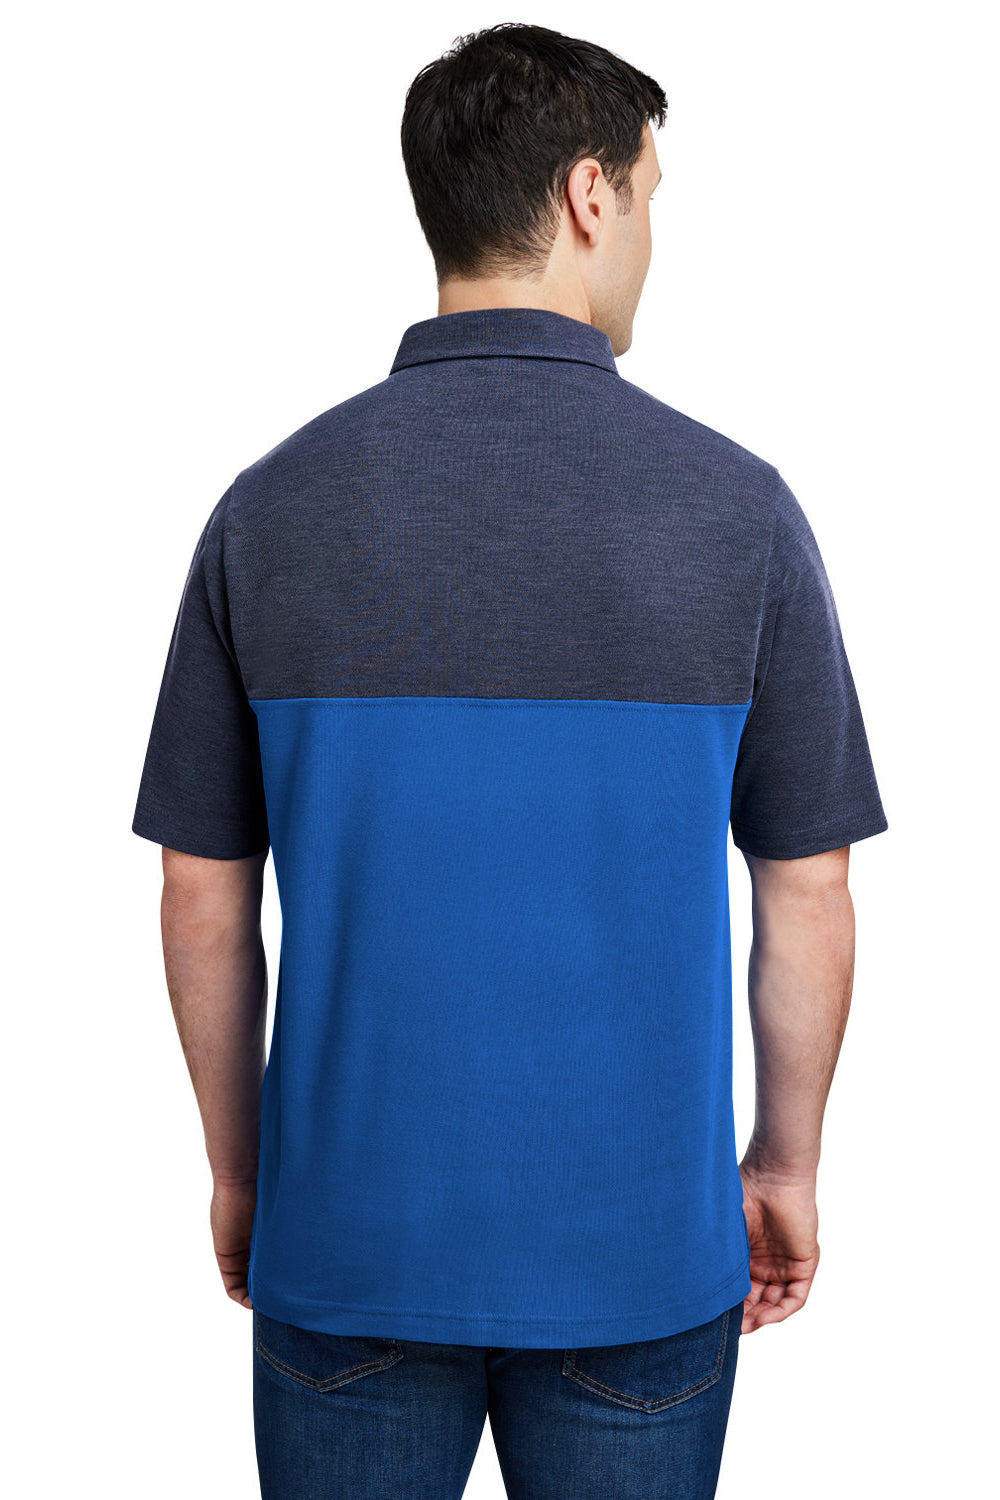 Core 365 CE112C Mens Fusion ChromaSoft Performance Moisture Wicking Colorblock Short Sleeve Polo Shirt True Royal Blue/Heather Navy Blue Back